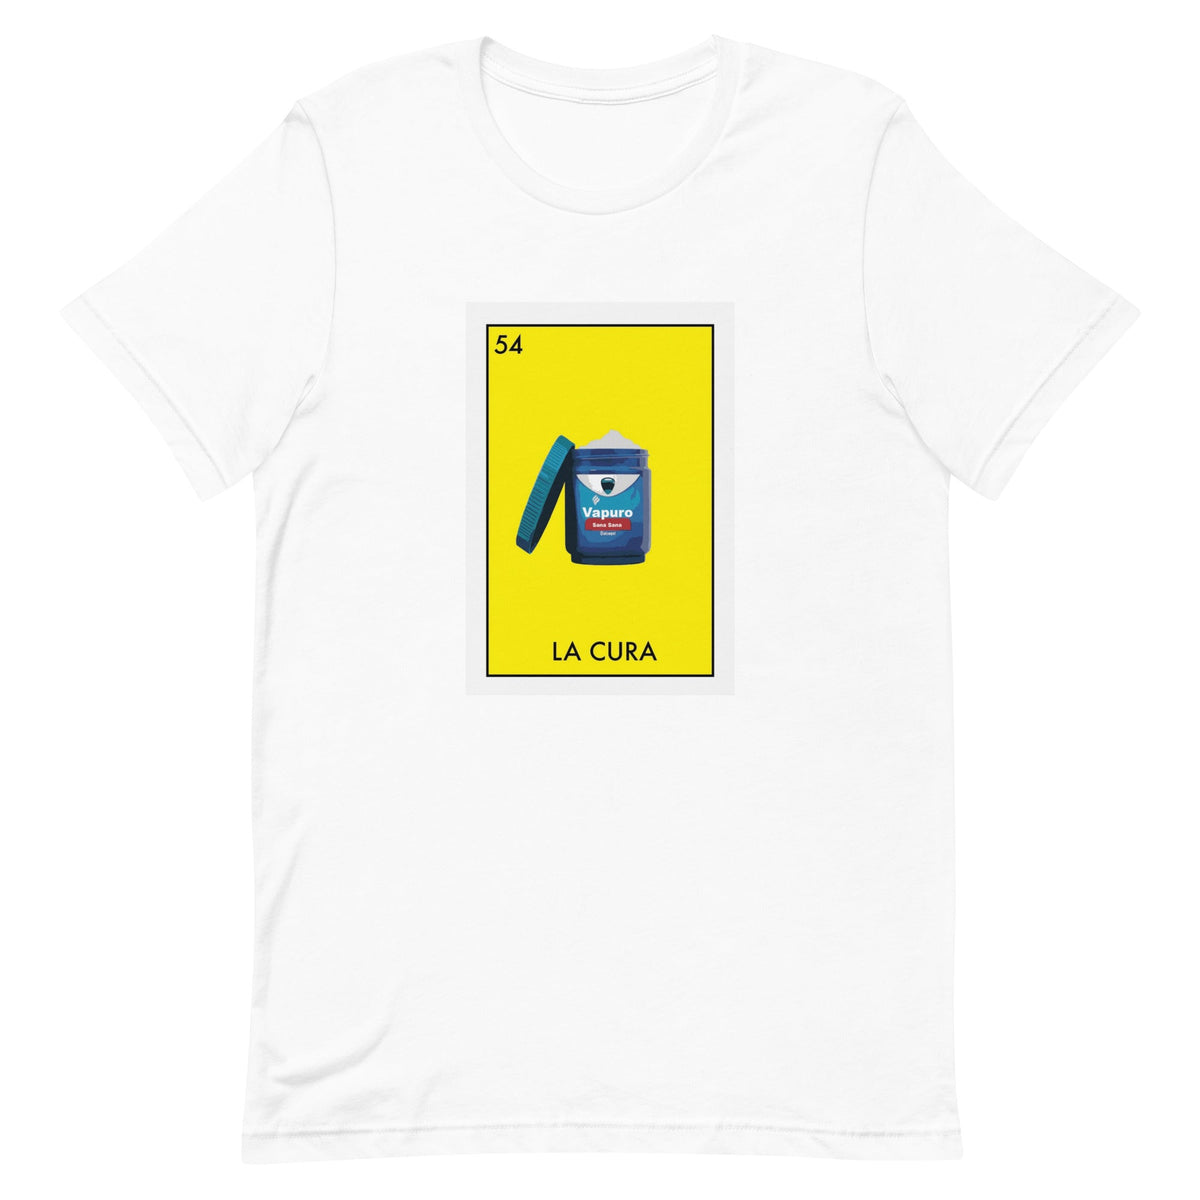 La Cura Loteria T-Shirt (The Cure)